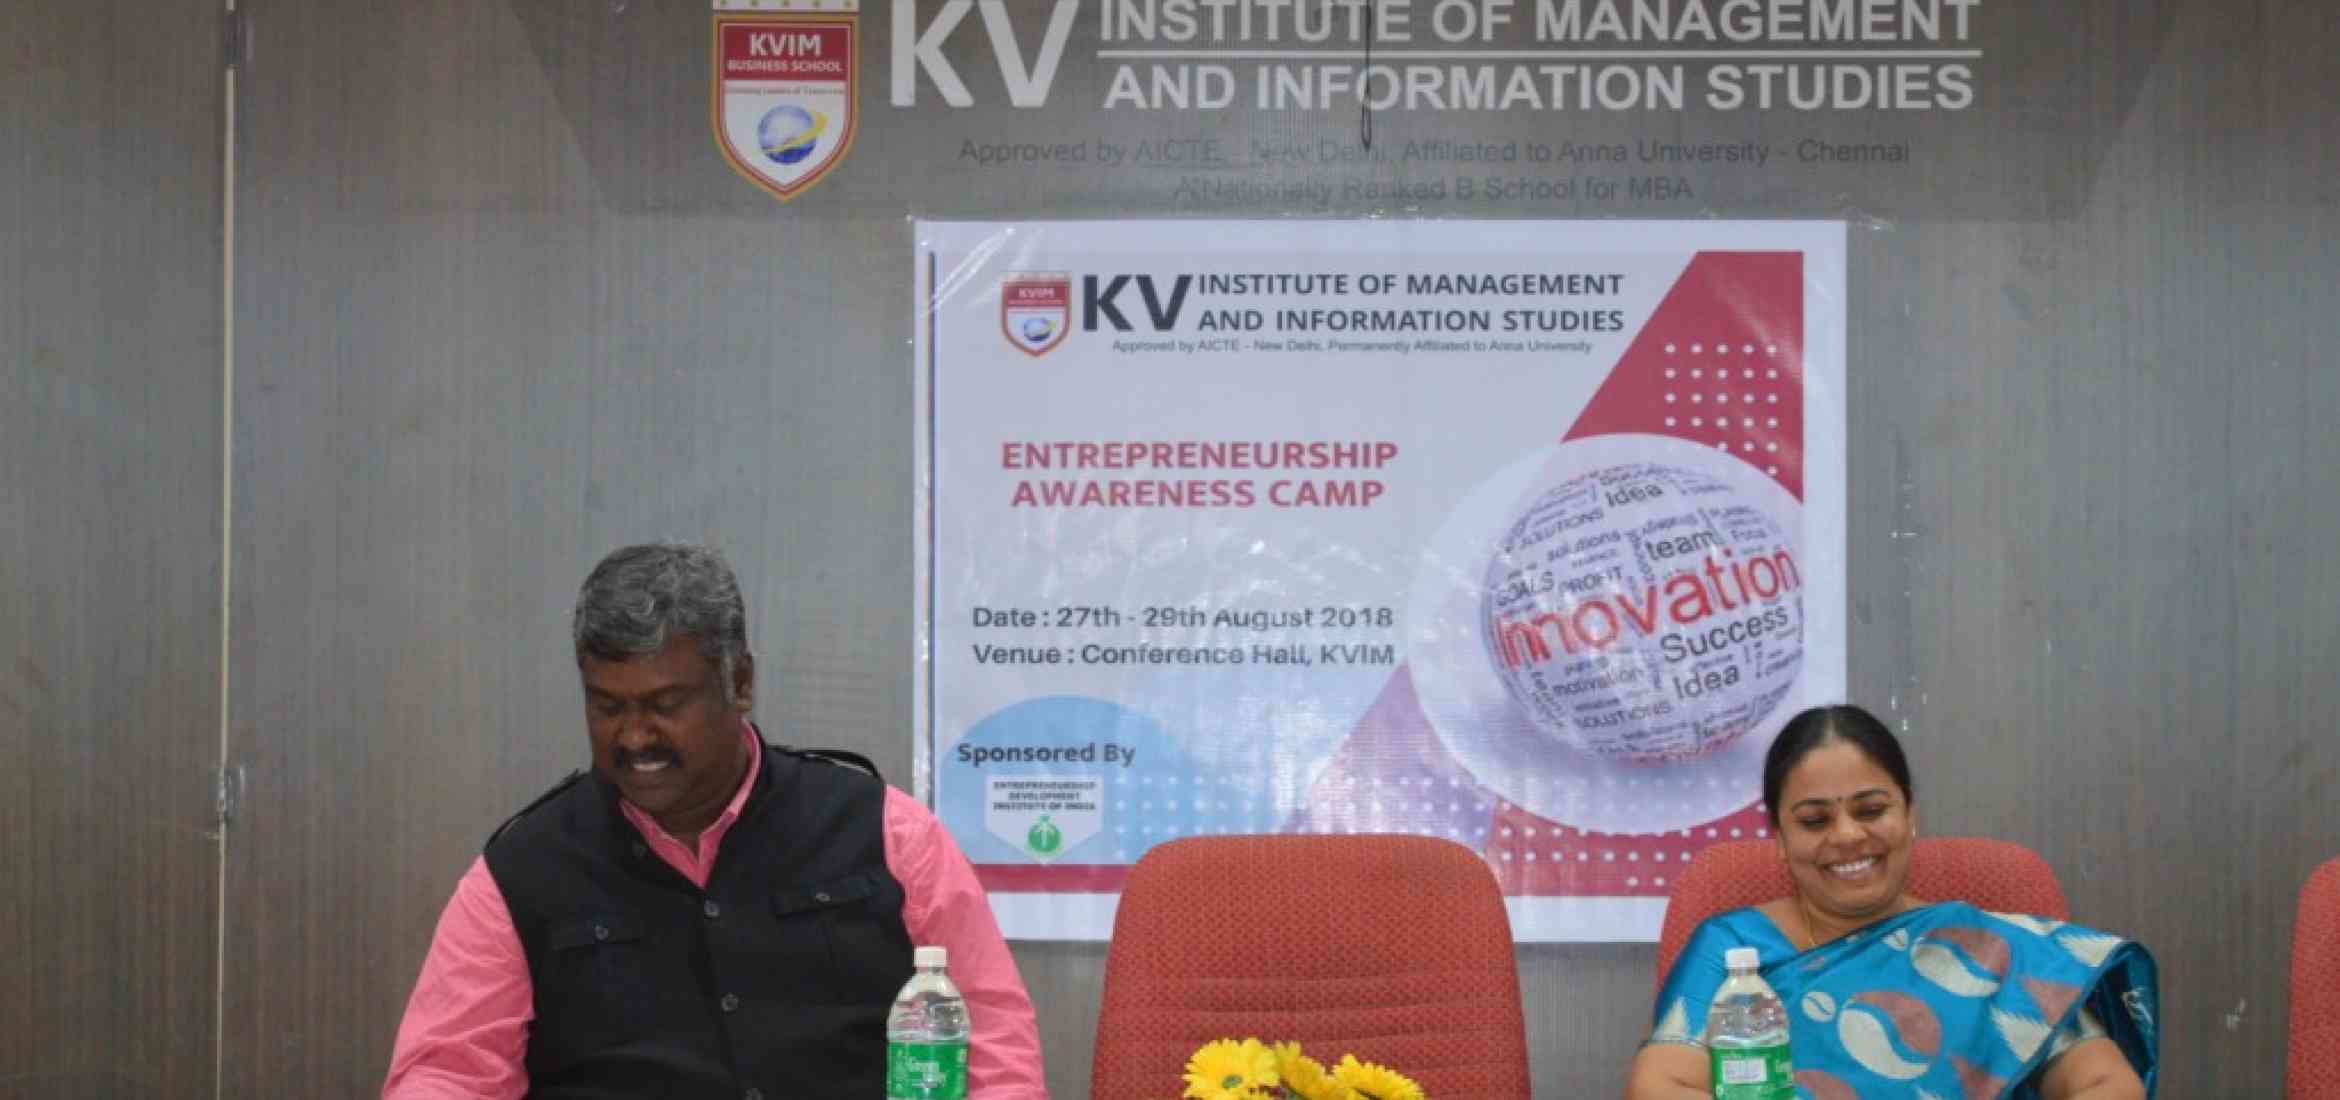 KVIMIS Entrepreneurship Awareness Camp